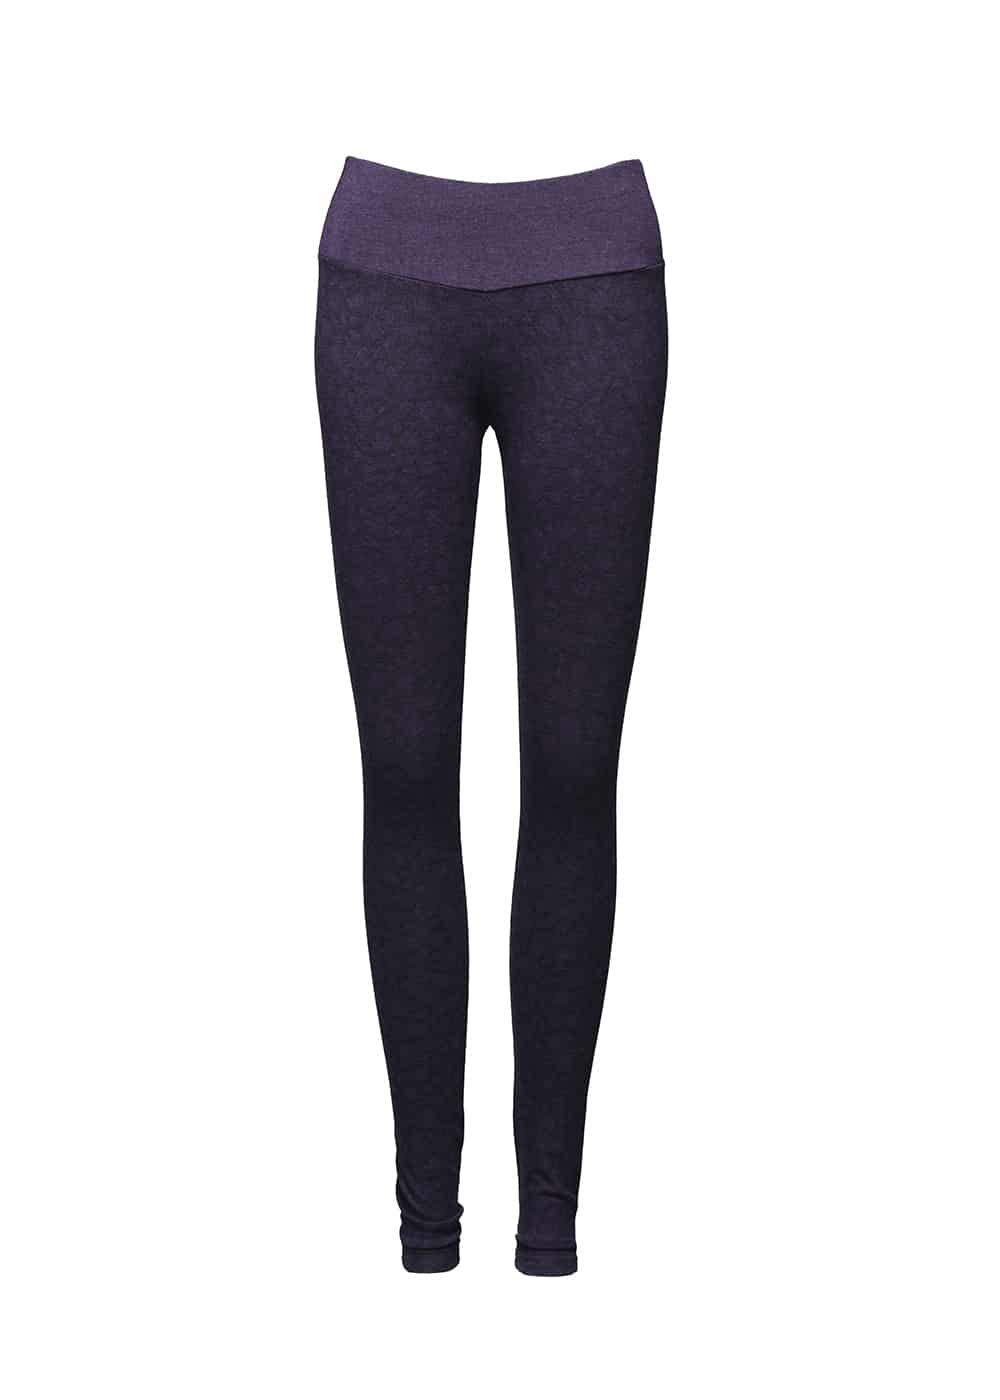 Nomads Hemp Wear Spectrum leggings meta print, made with bamboo and organic cotton, purple fabric, at tantrika australia